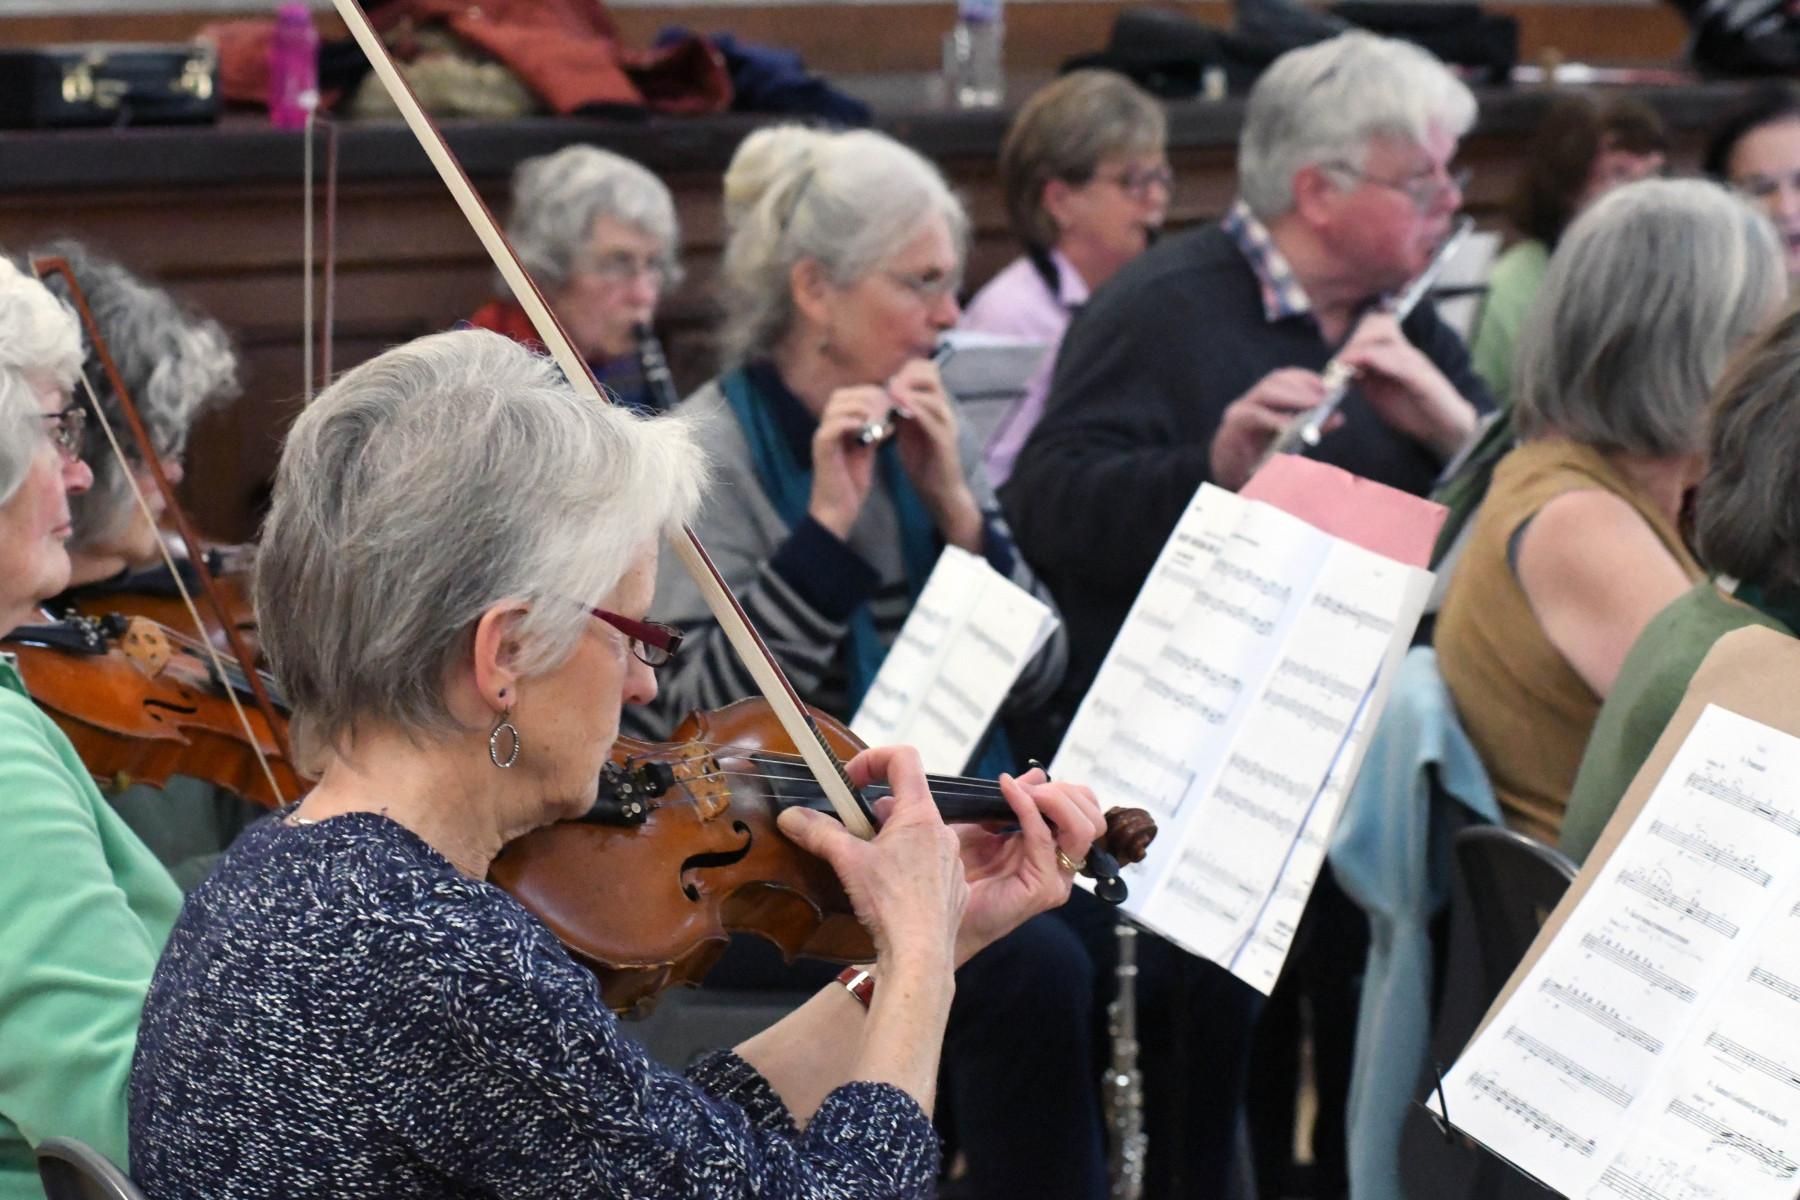 Southside Community Orchestra rehearsal, Southside Community Centre, Edinburgh, November 11, 2019.